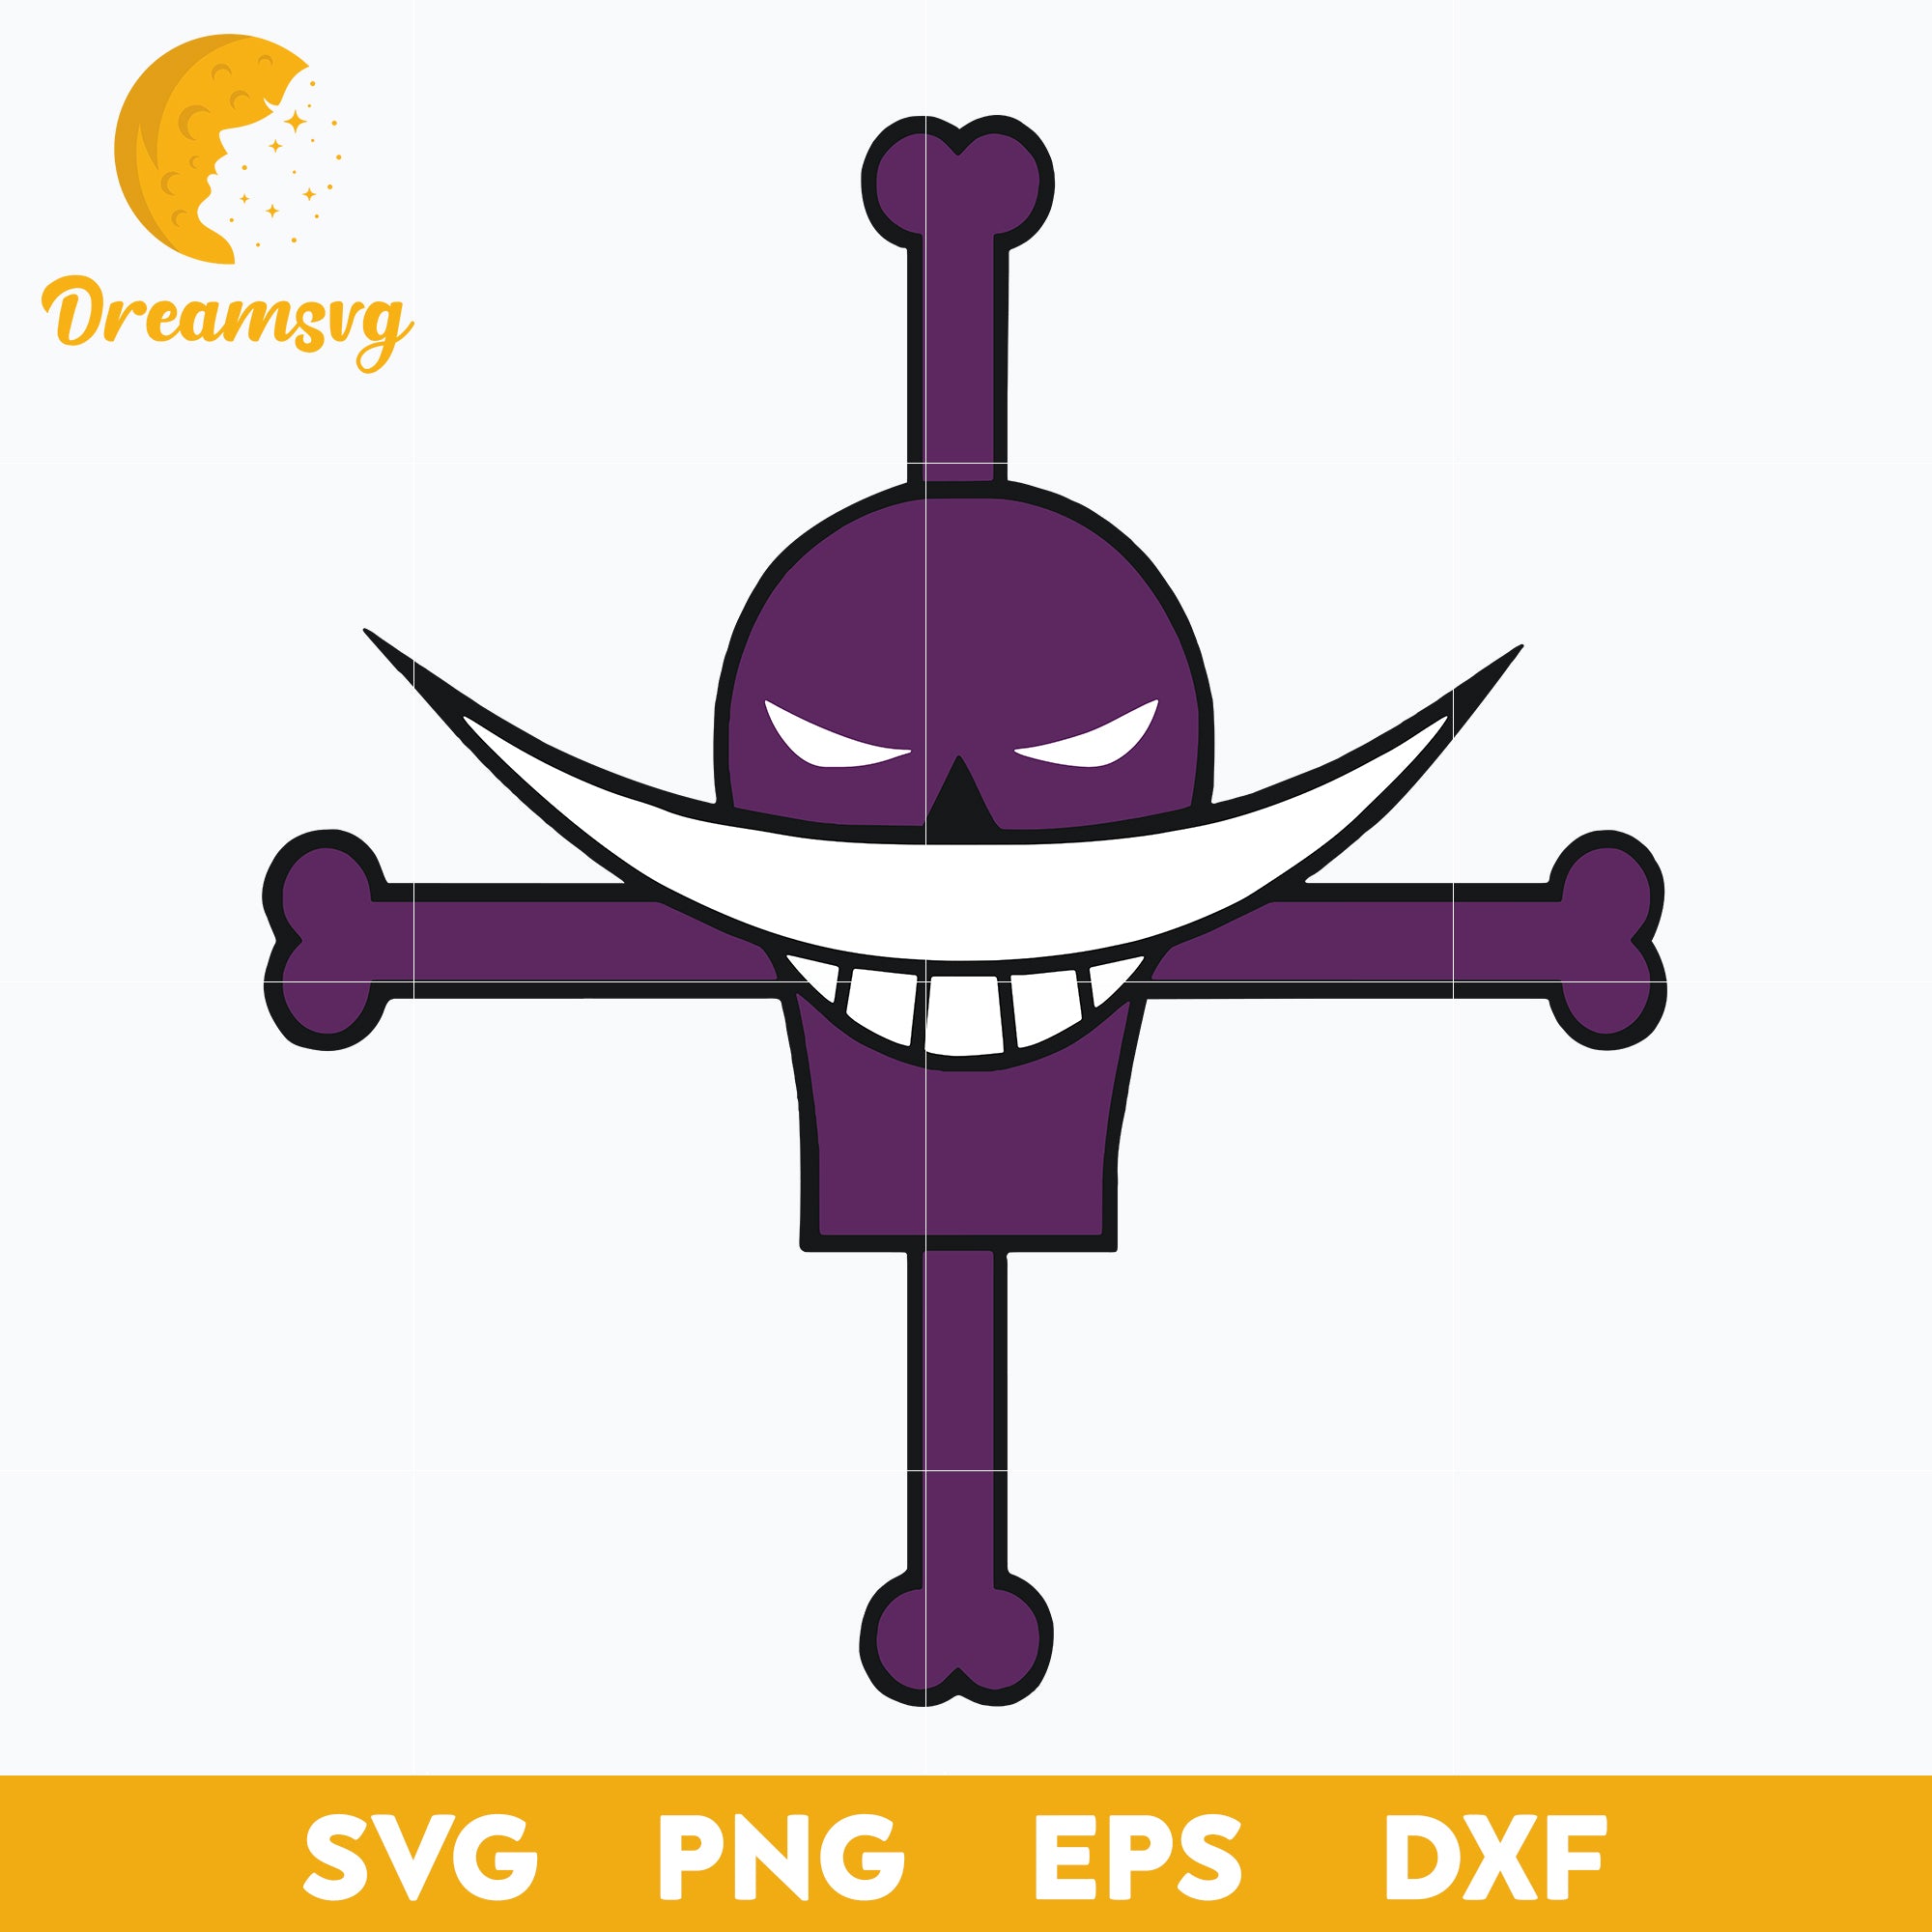 One Piece Straw Hat Pirates Skull Svg, One Piece Logo Svg, One Piece Svg,  Anime Svg, png, eps, dxf digital download.